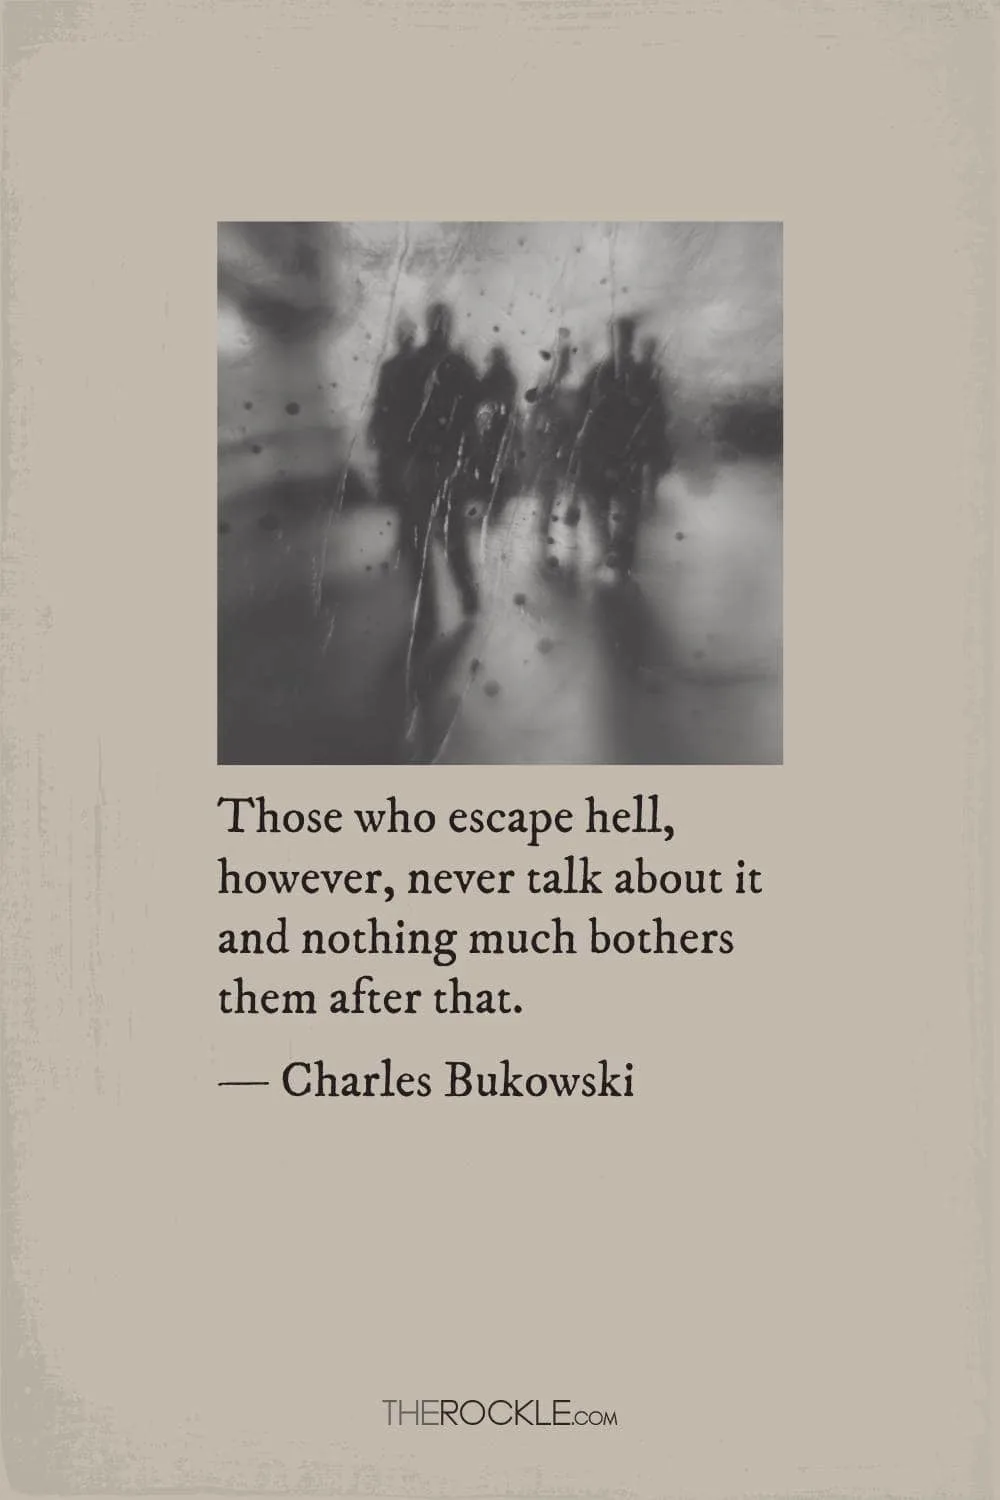 Bukowski quote about trauma survivors